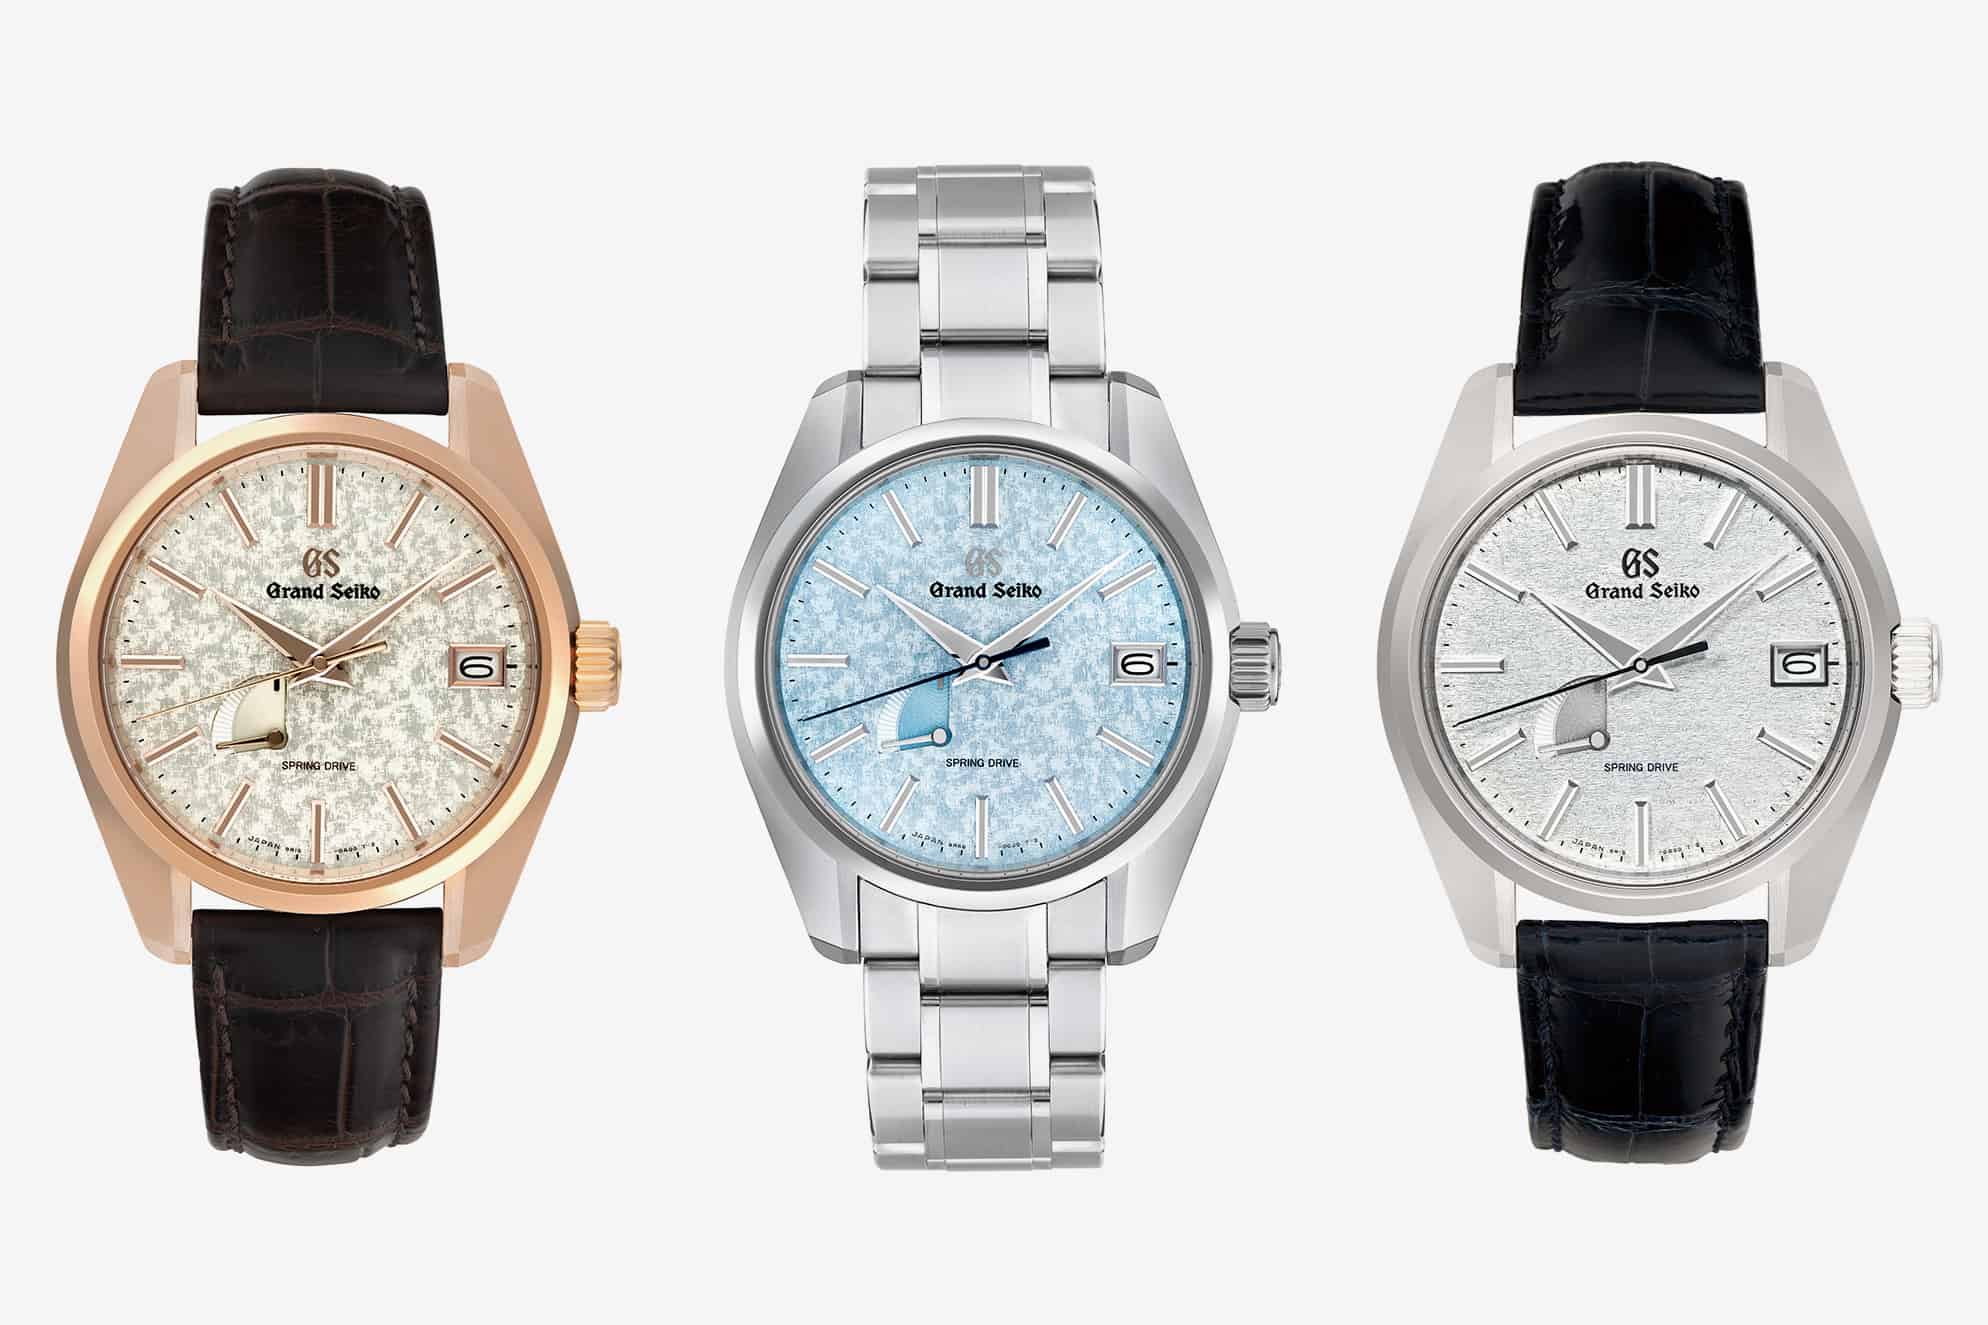 Introducing The Grand Seiko Ref. SBGA384, SBGA385, And SBGA387 - Three  US-exclusive Limited Edition Watches